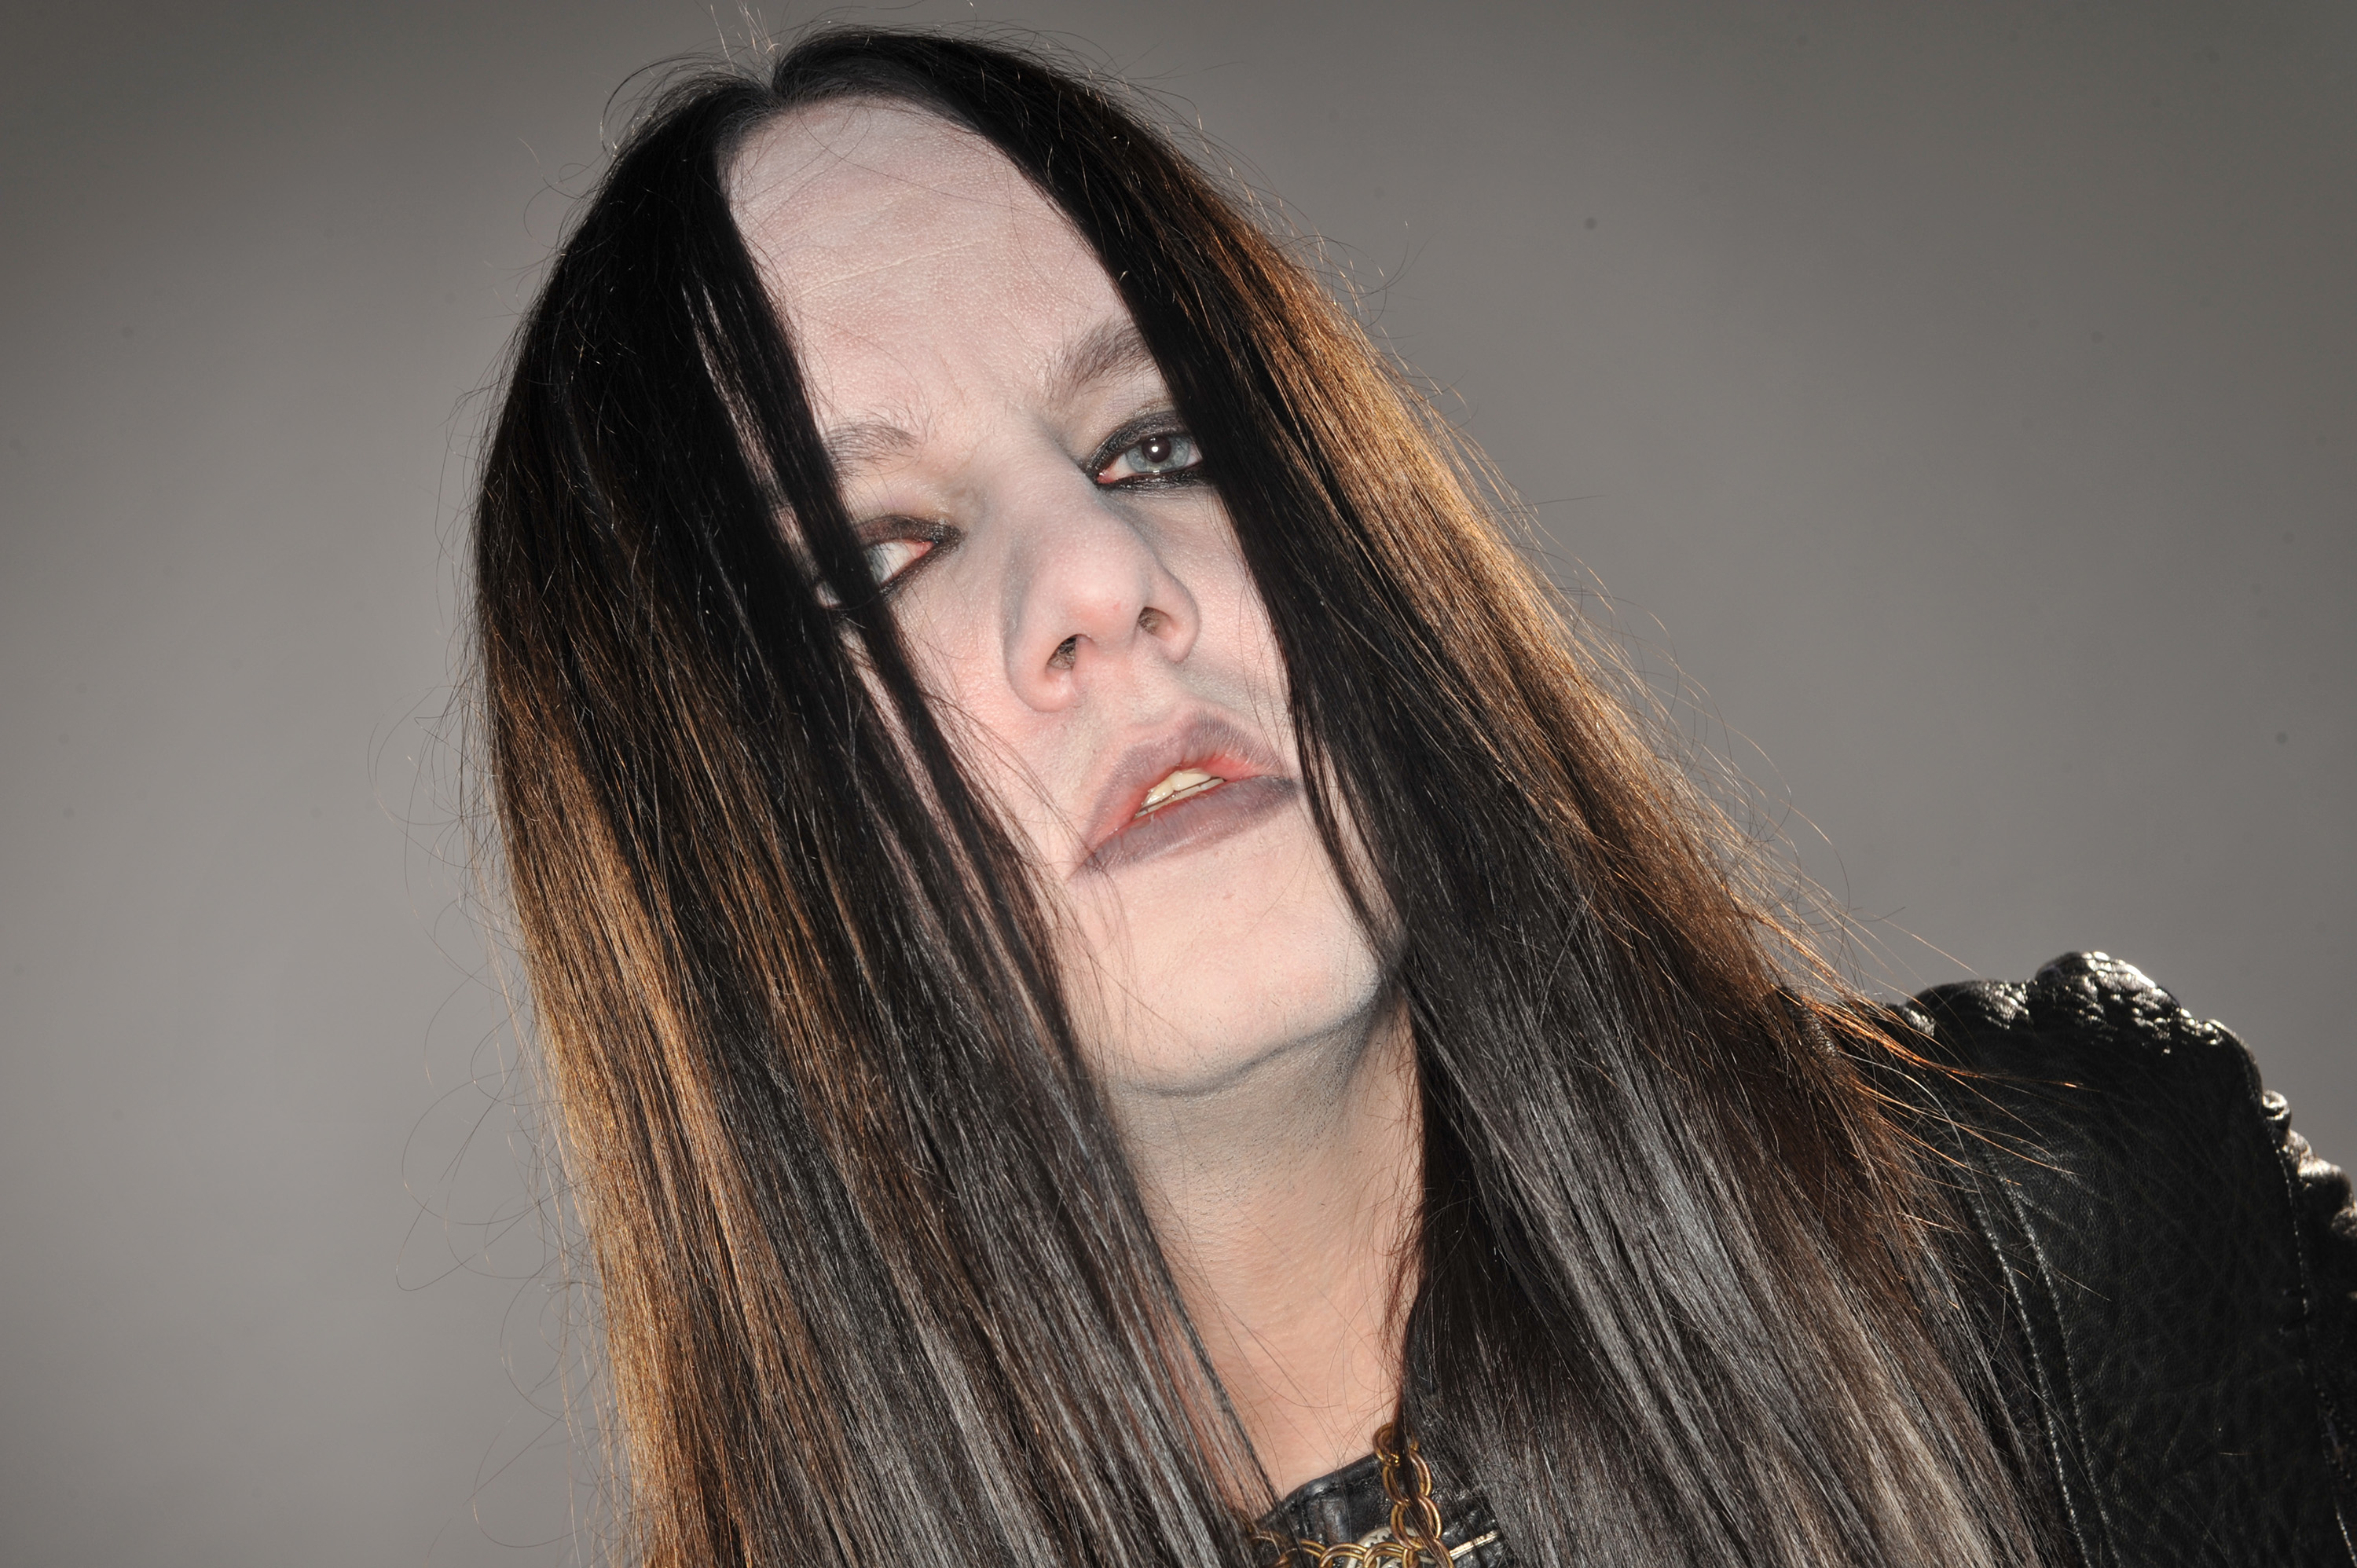 Slipknot founding member Joey Jordison dies at 46